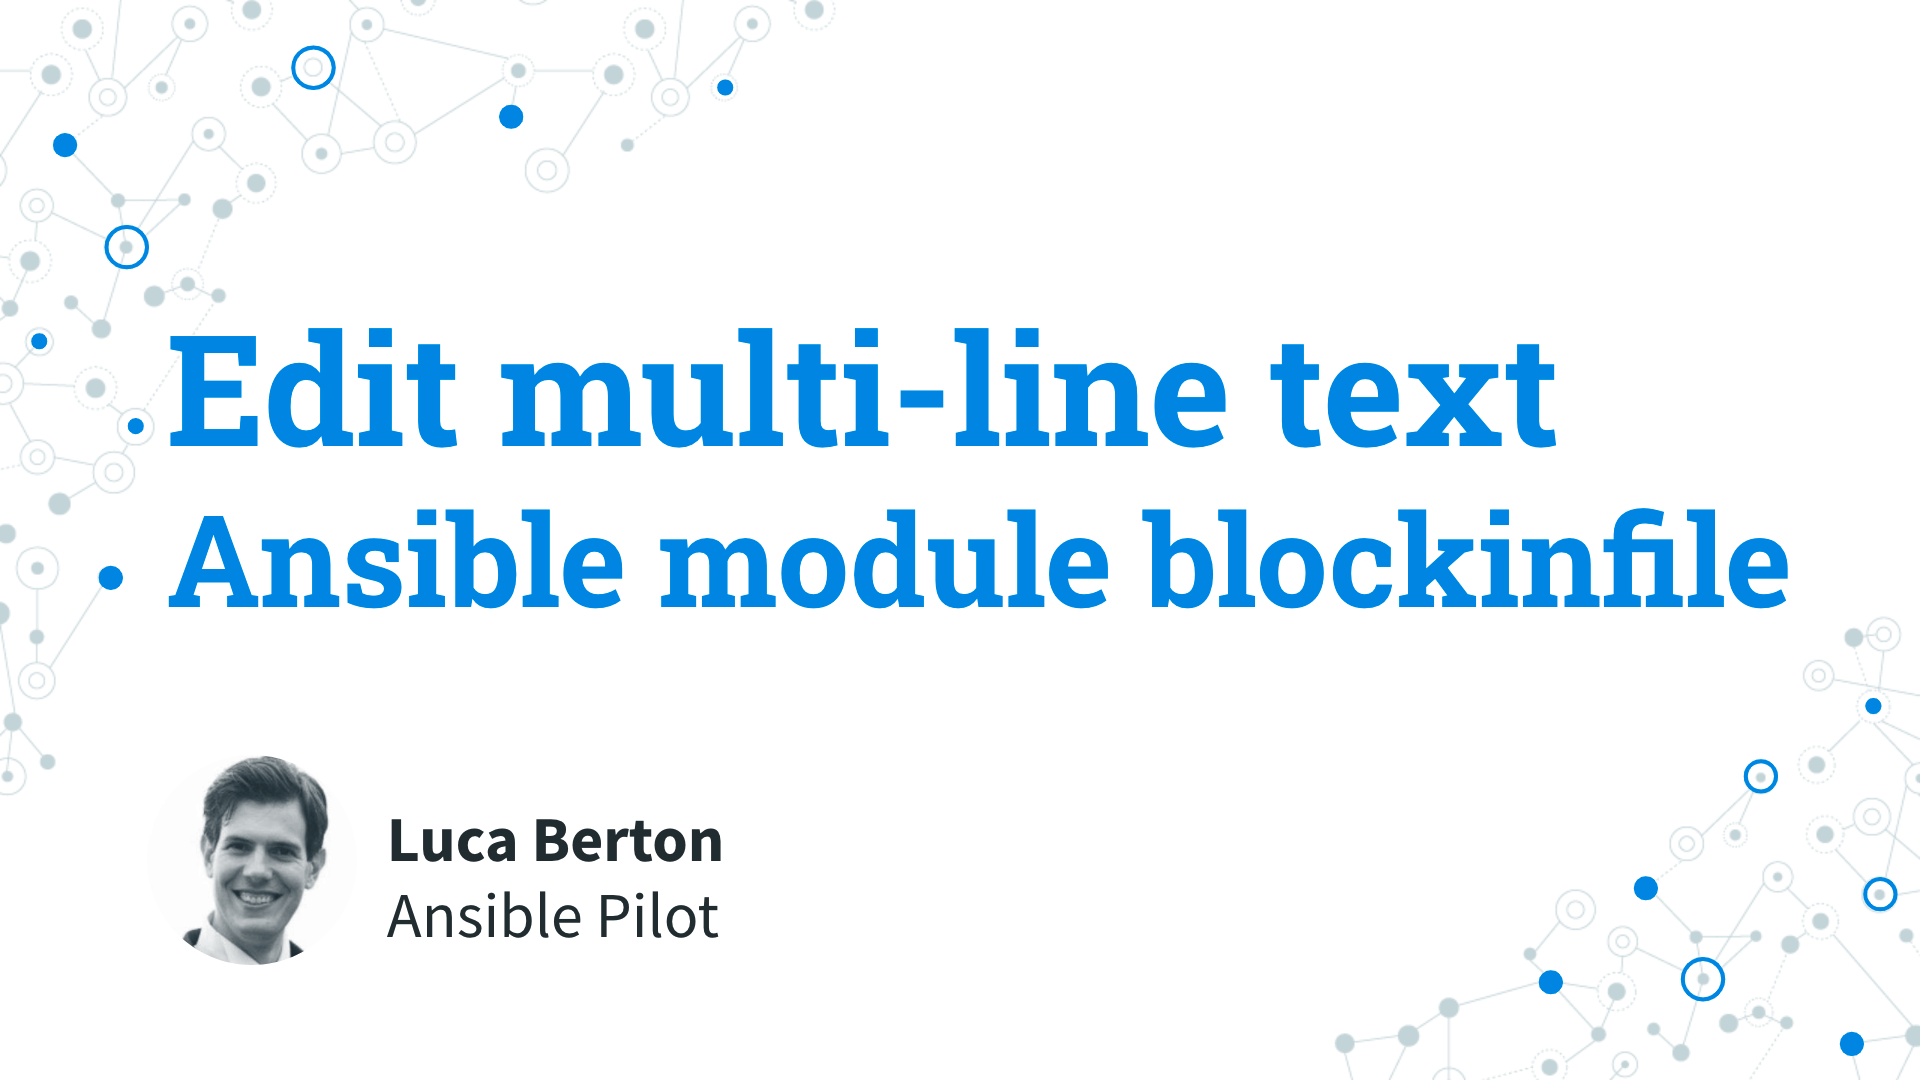 Edit multi-line text - Ansible module blockinfile